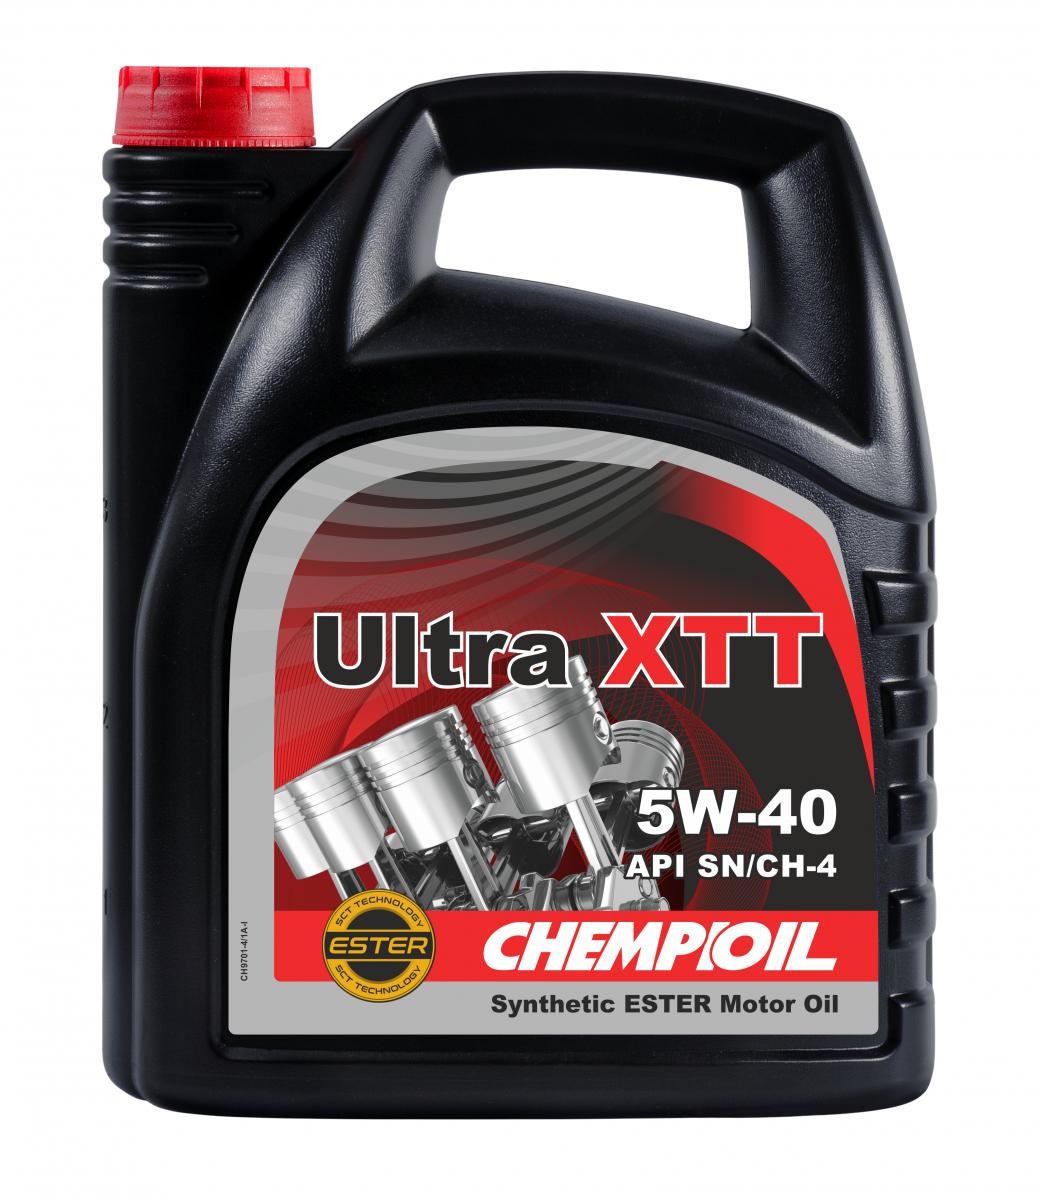 CHEMPIOIL Ultra, XTT 5W-40, 4l Motor oil CH9701-4 buy